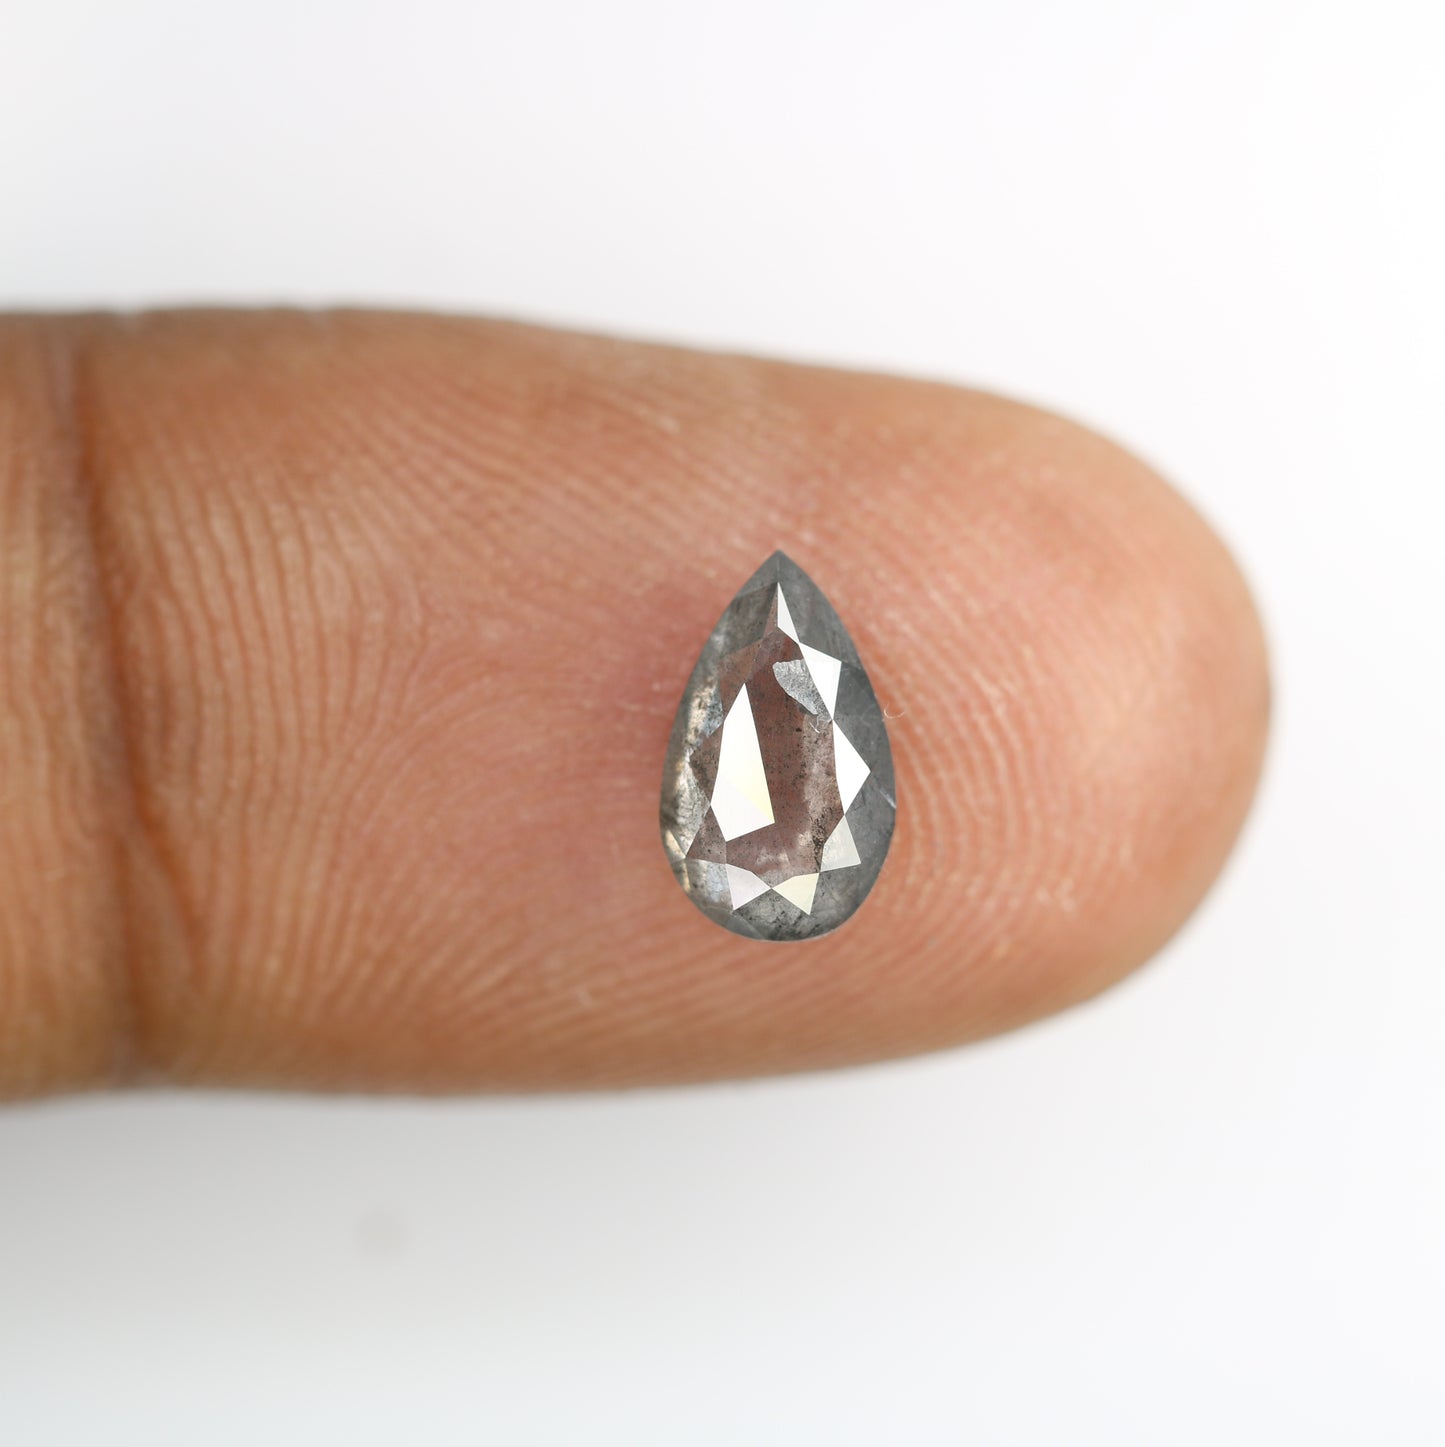 1.19 CT Fancy Salt And Pepper Pear Shape Diamond For Wedding Ring | Gift For Her